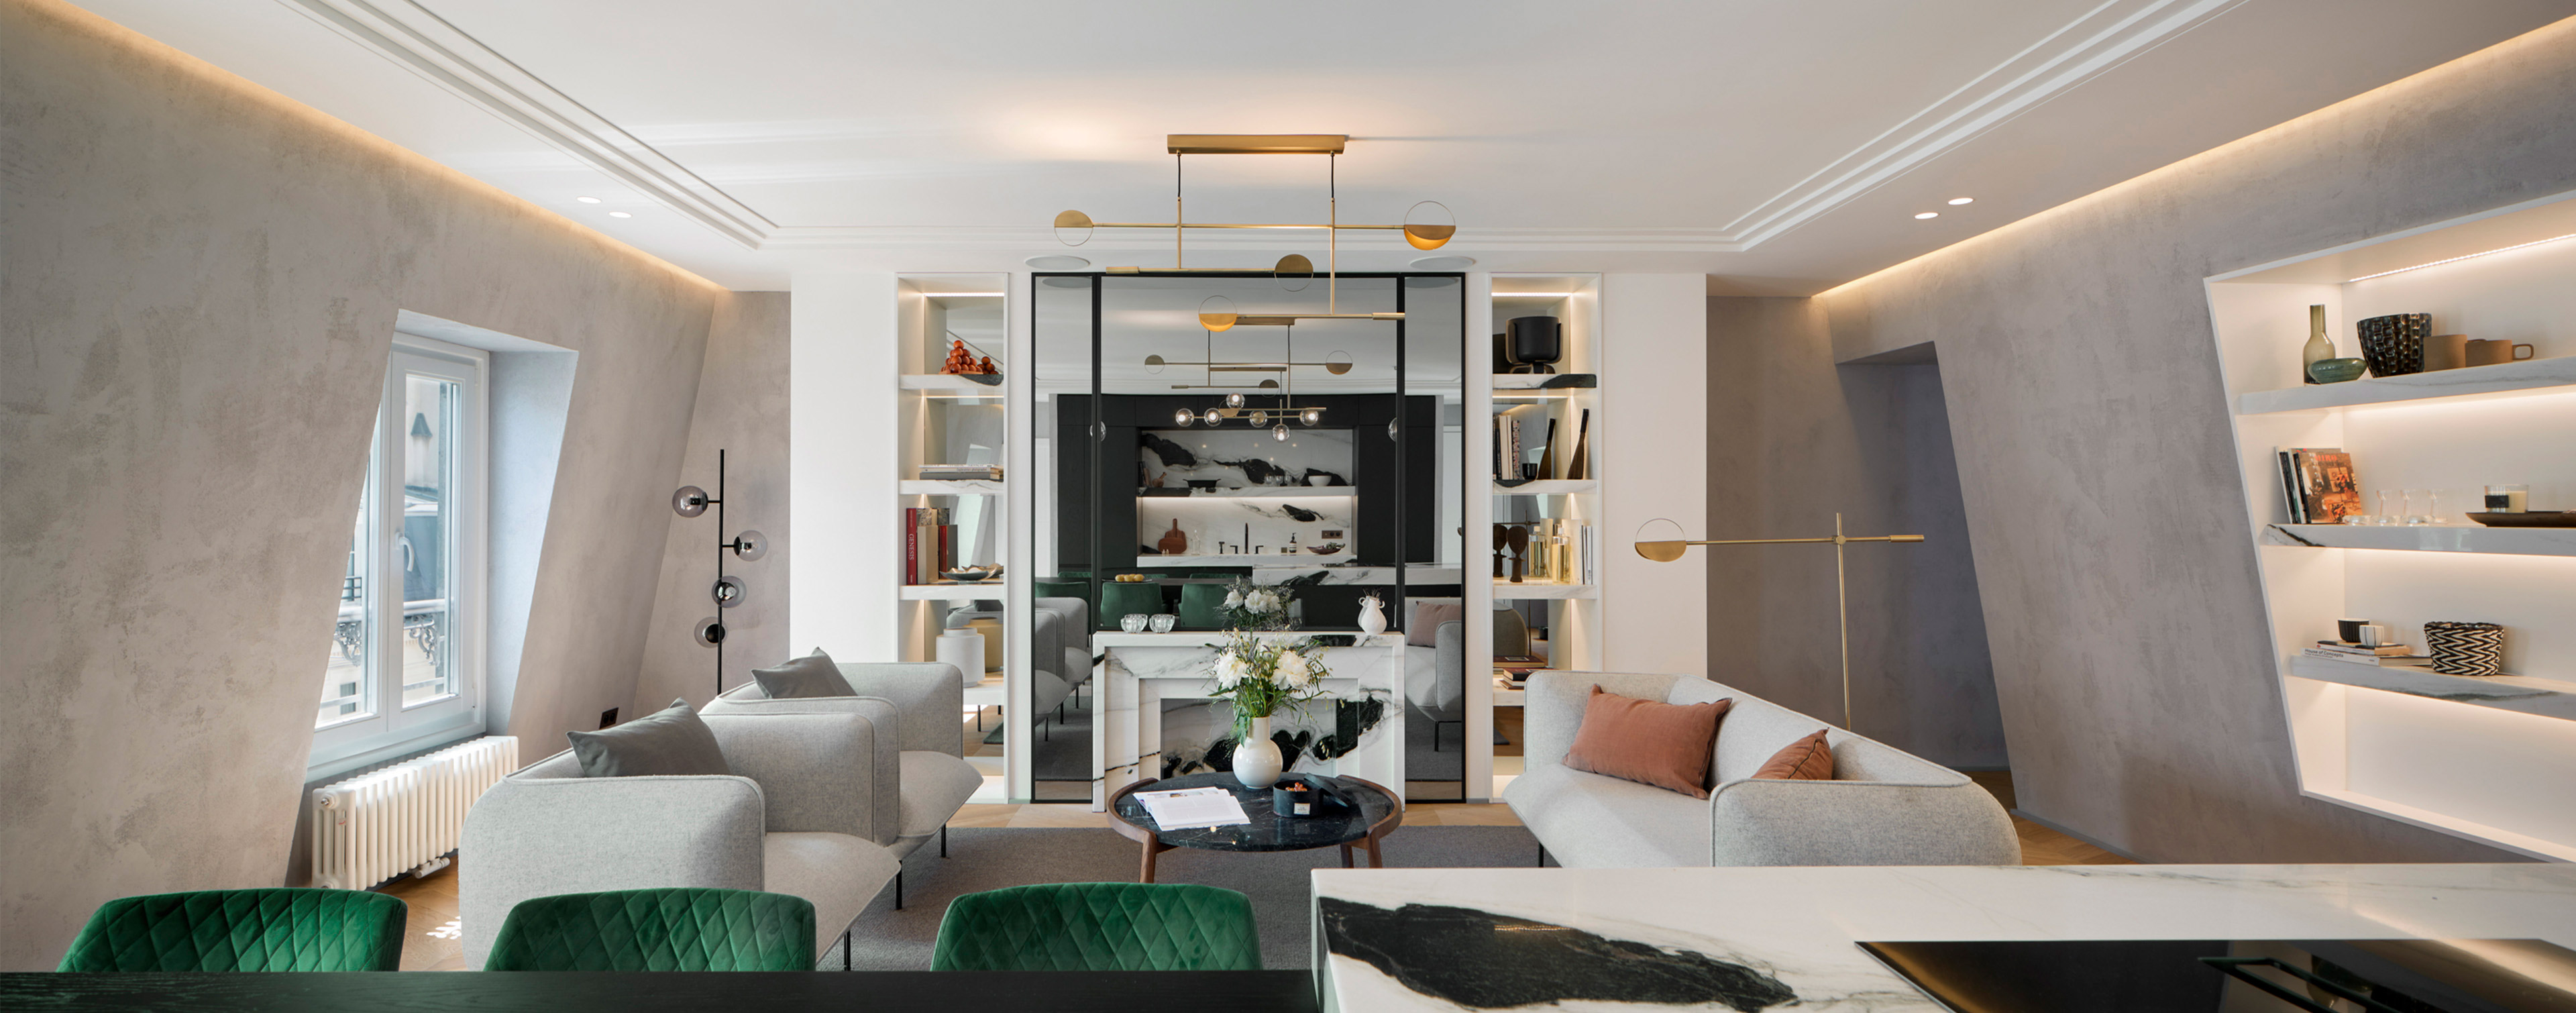 luv studio luxury architects paris chateaubriand apartment IMG 01 - LUV Studio - Architecture et design - Barcelone